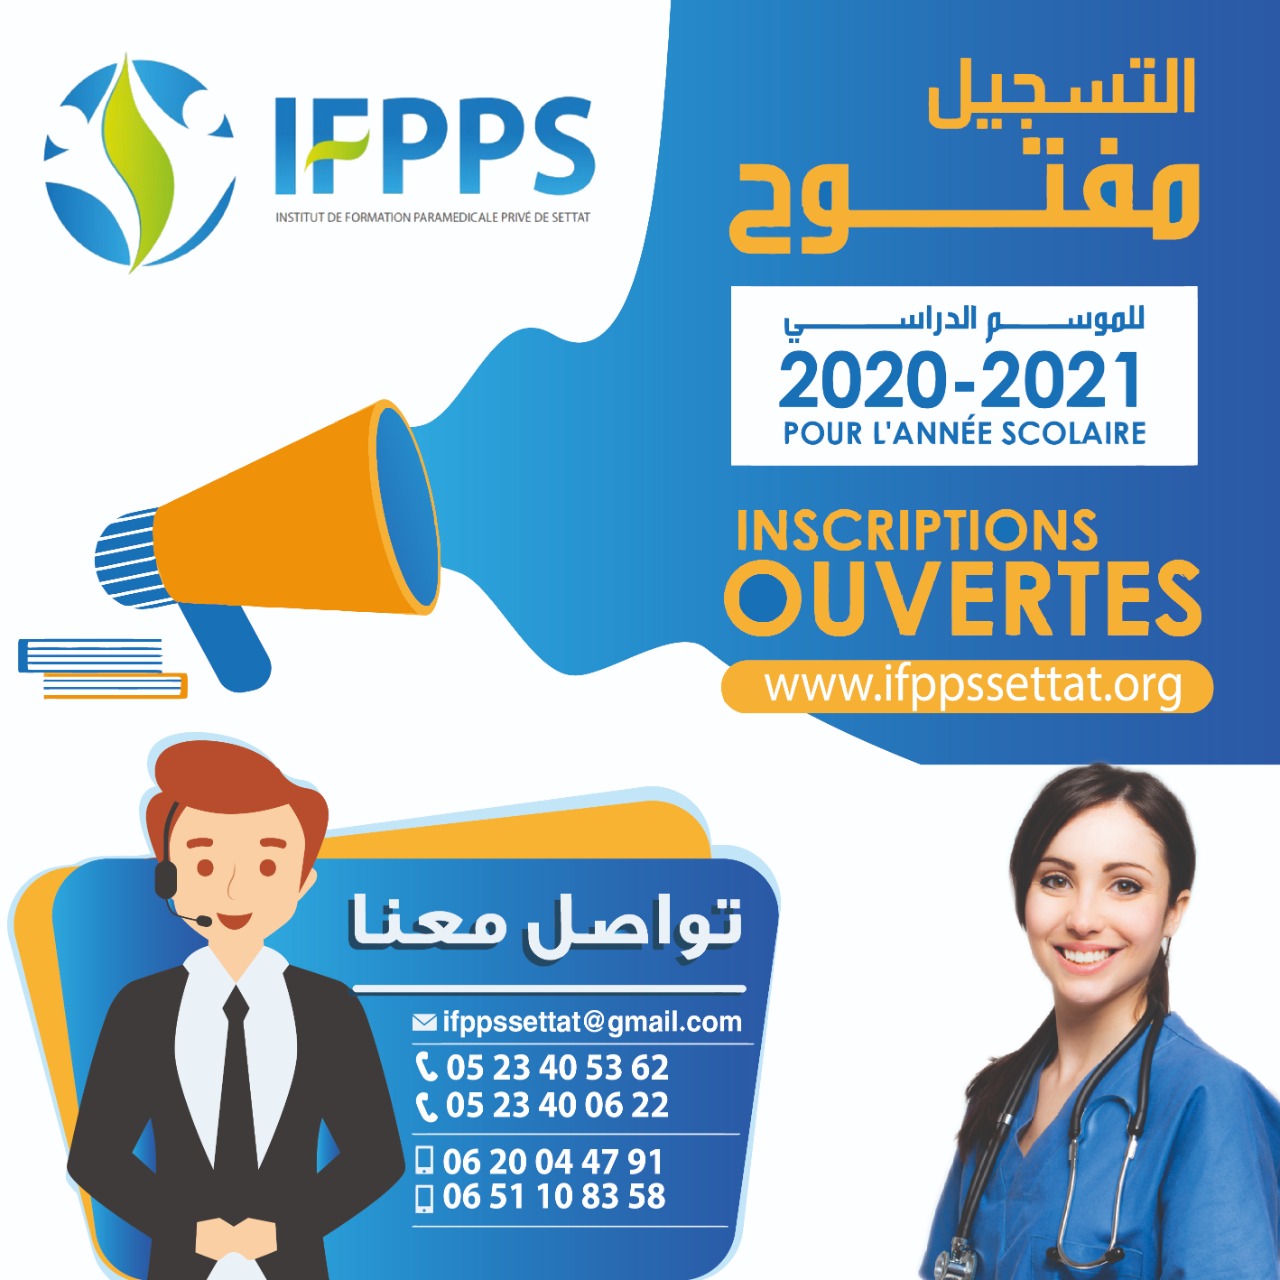 Flyer IFPPS